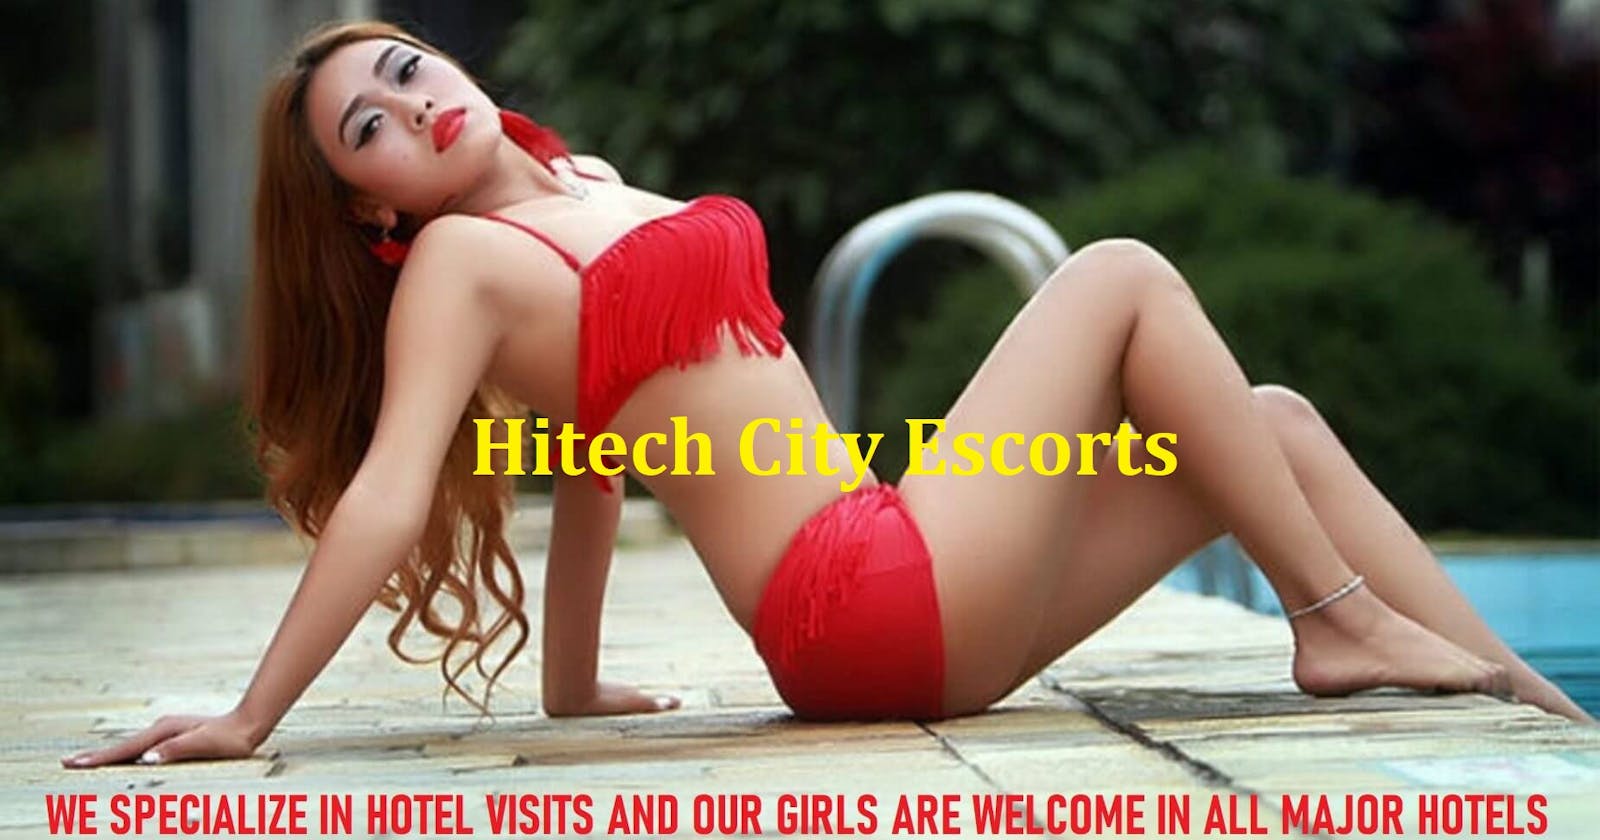 Hitech City escorts sexy models, hottest call girls